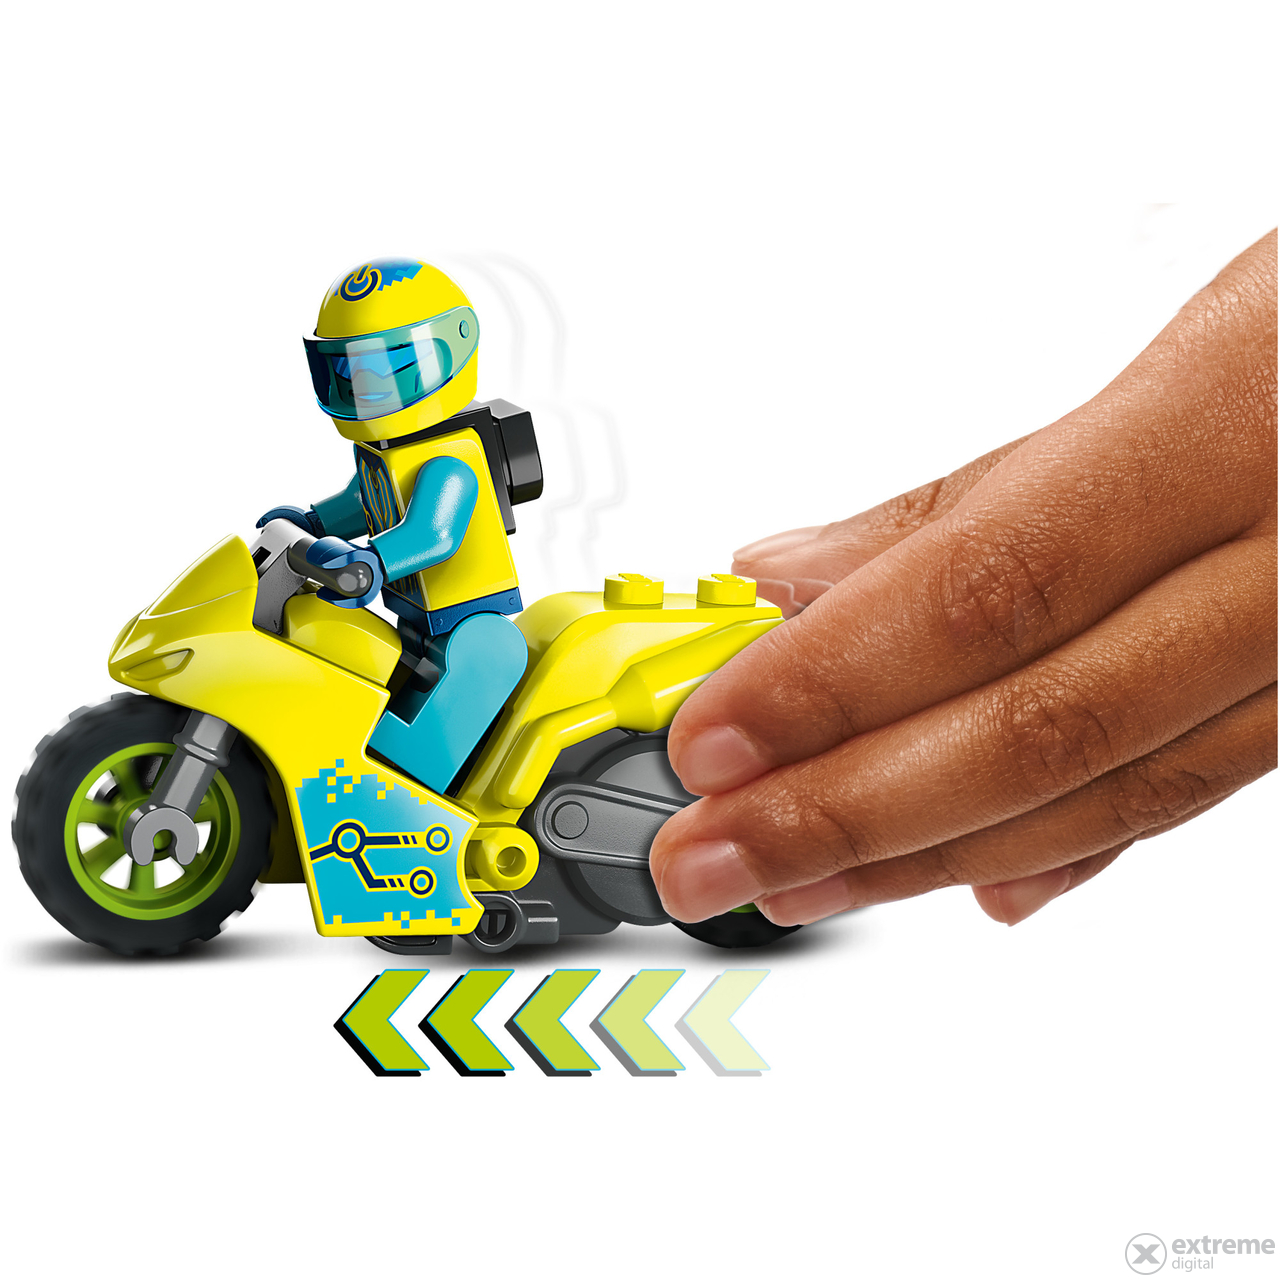 LEGO® City 60358  - Cyber-Stuntbike (5702017416199)